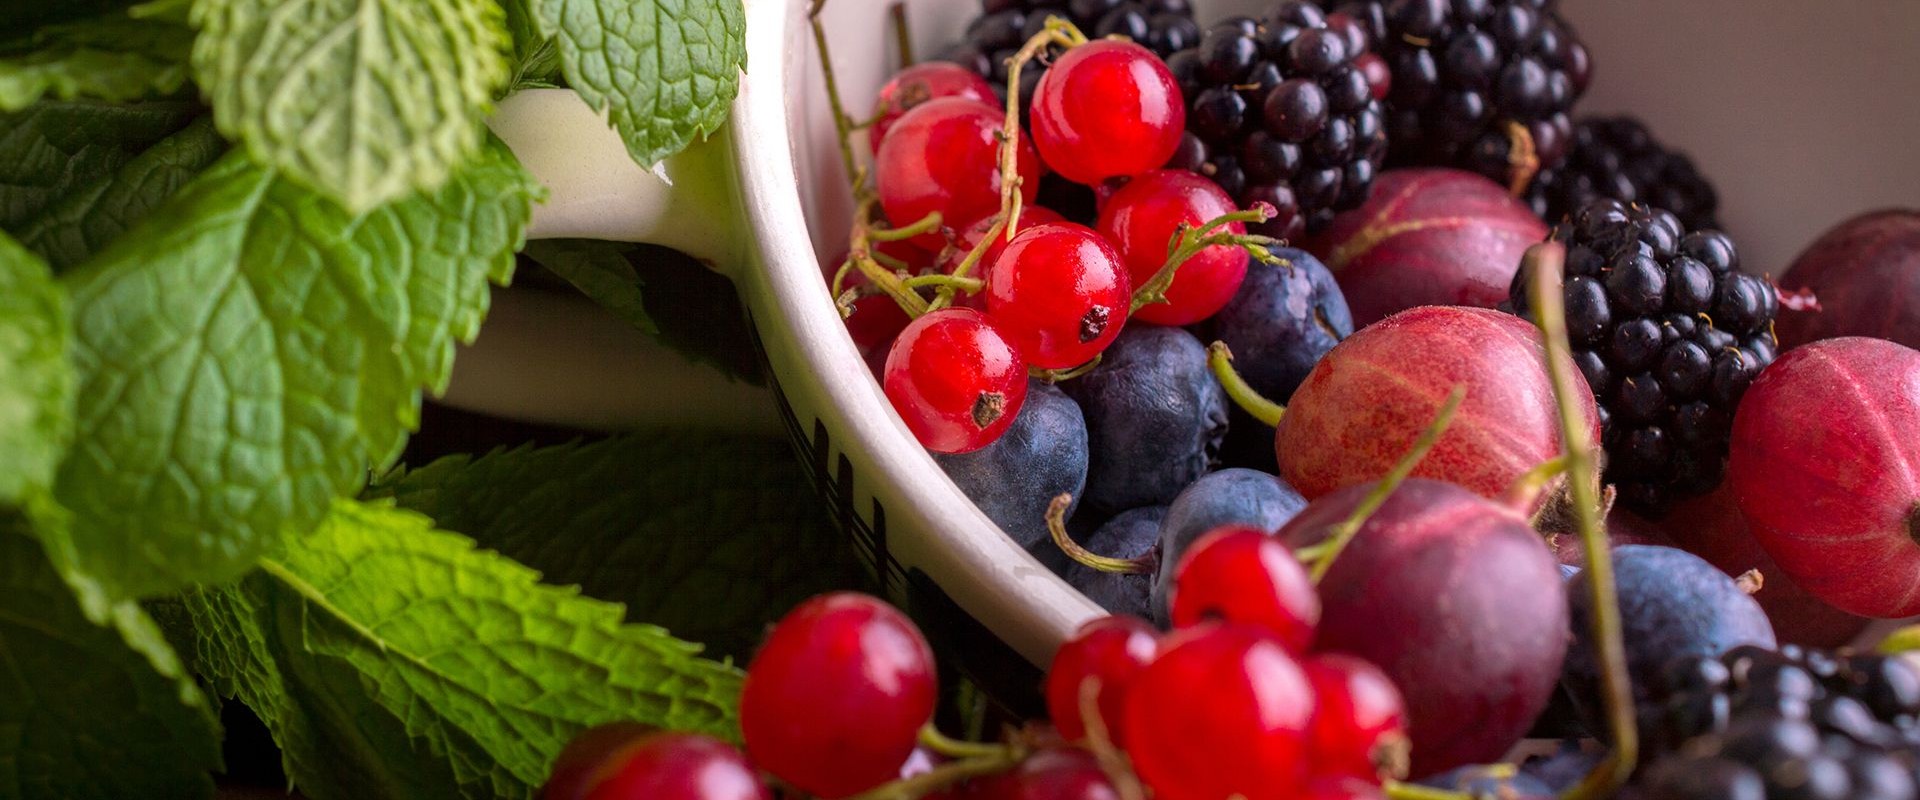 Food intolerances image showing berries